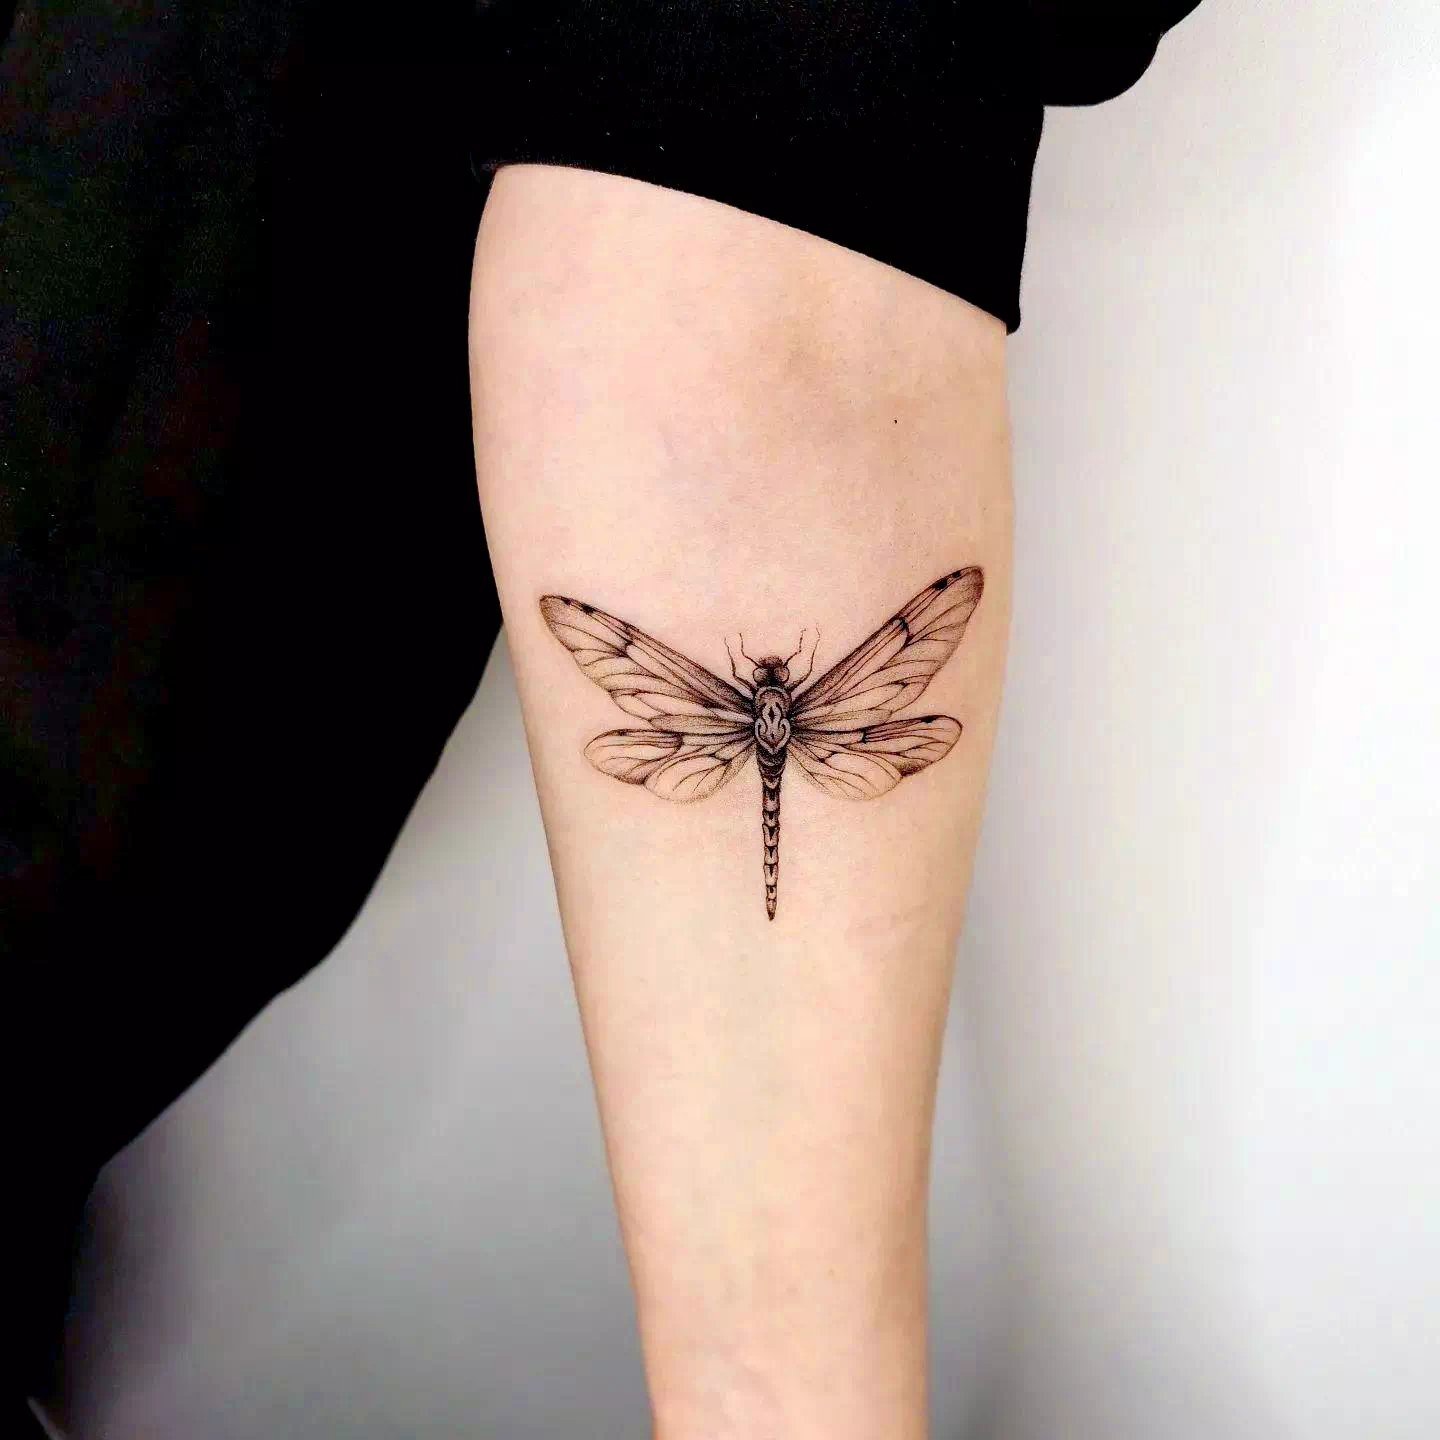 Dragonfly tattoo ideas 5